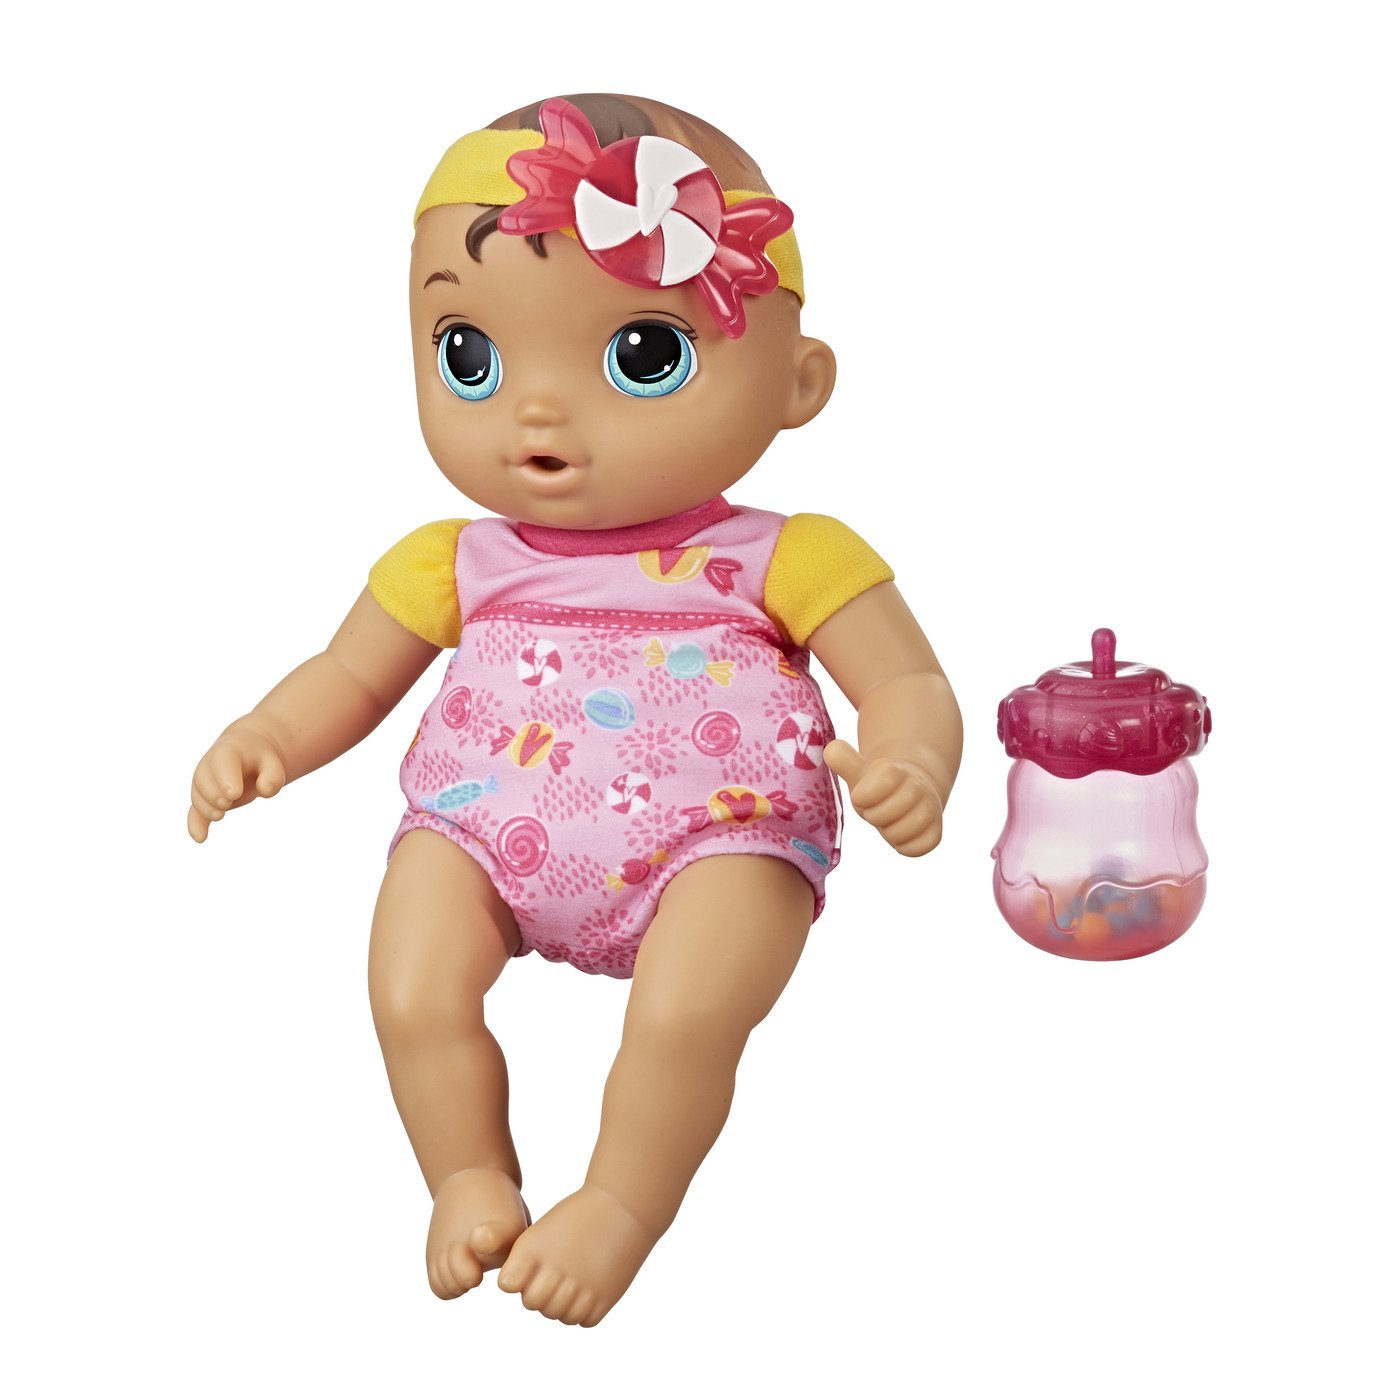 argos baby dolls for sale